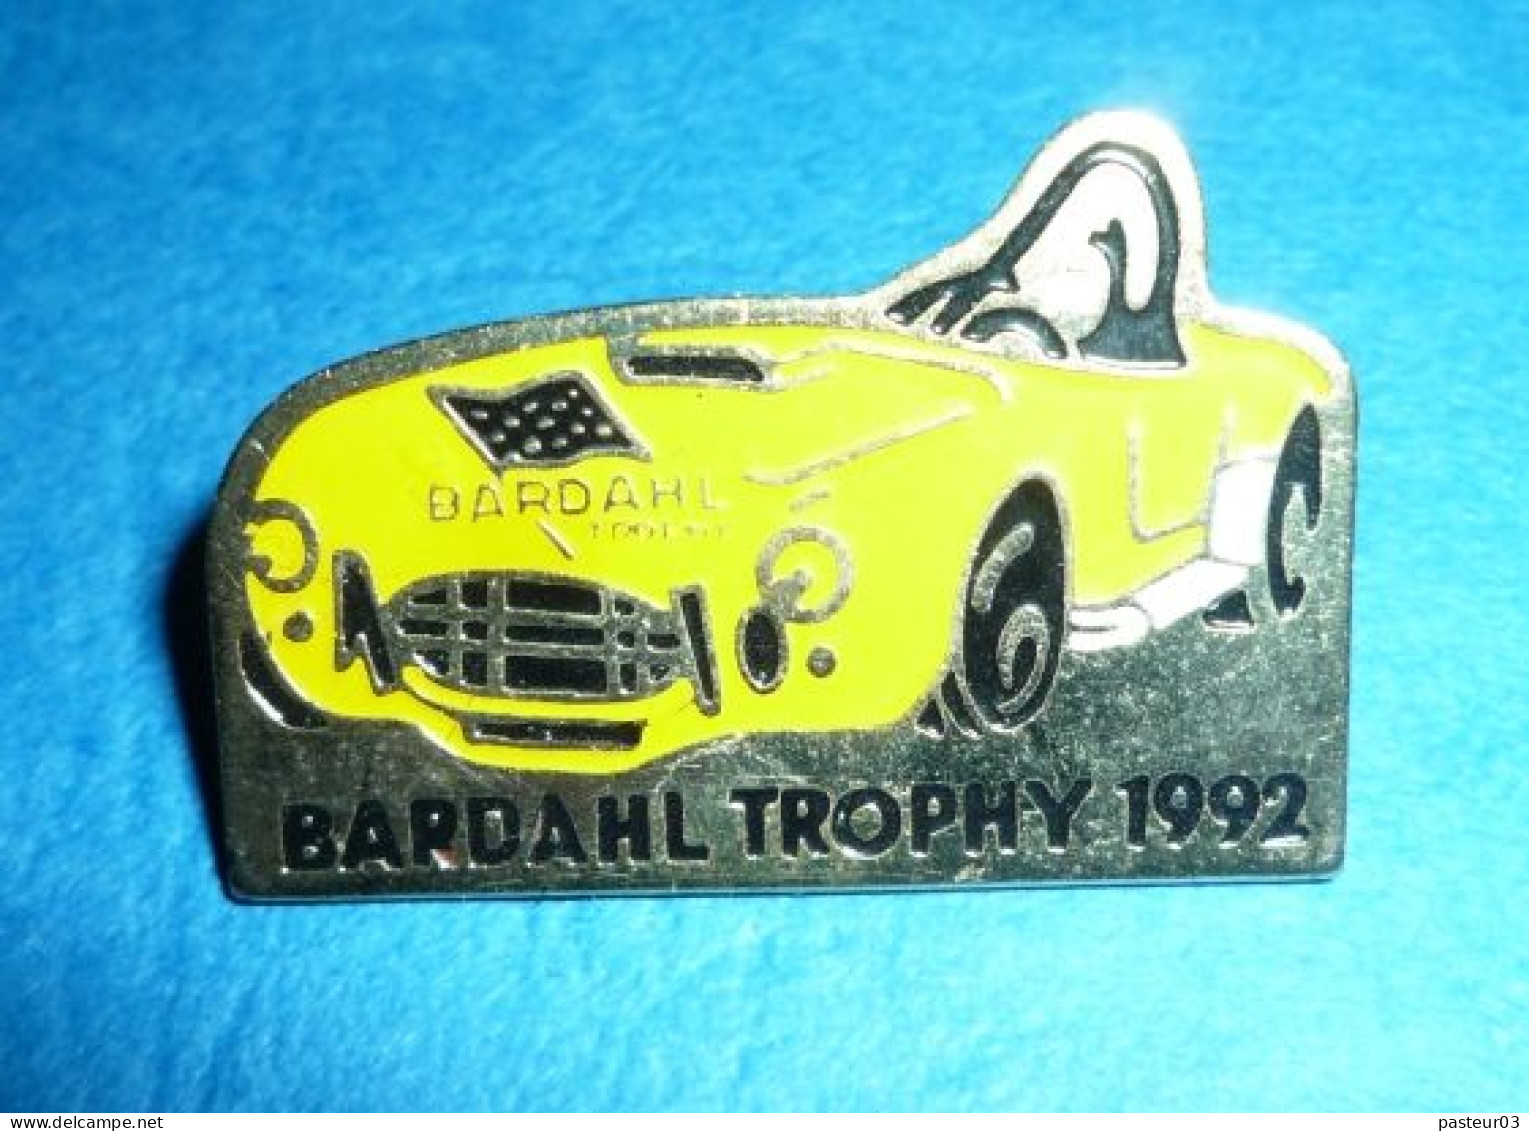 Bardhal Trophy 1992 Compétition Véhicules De Colletions Nevers Magny Cours (1ex.) - Carburantes